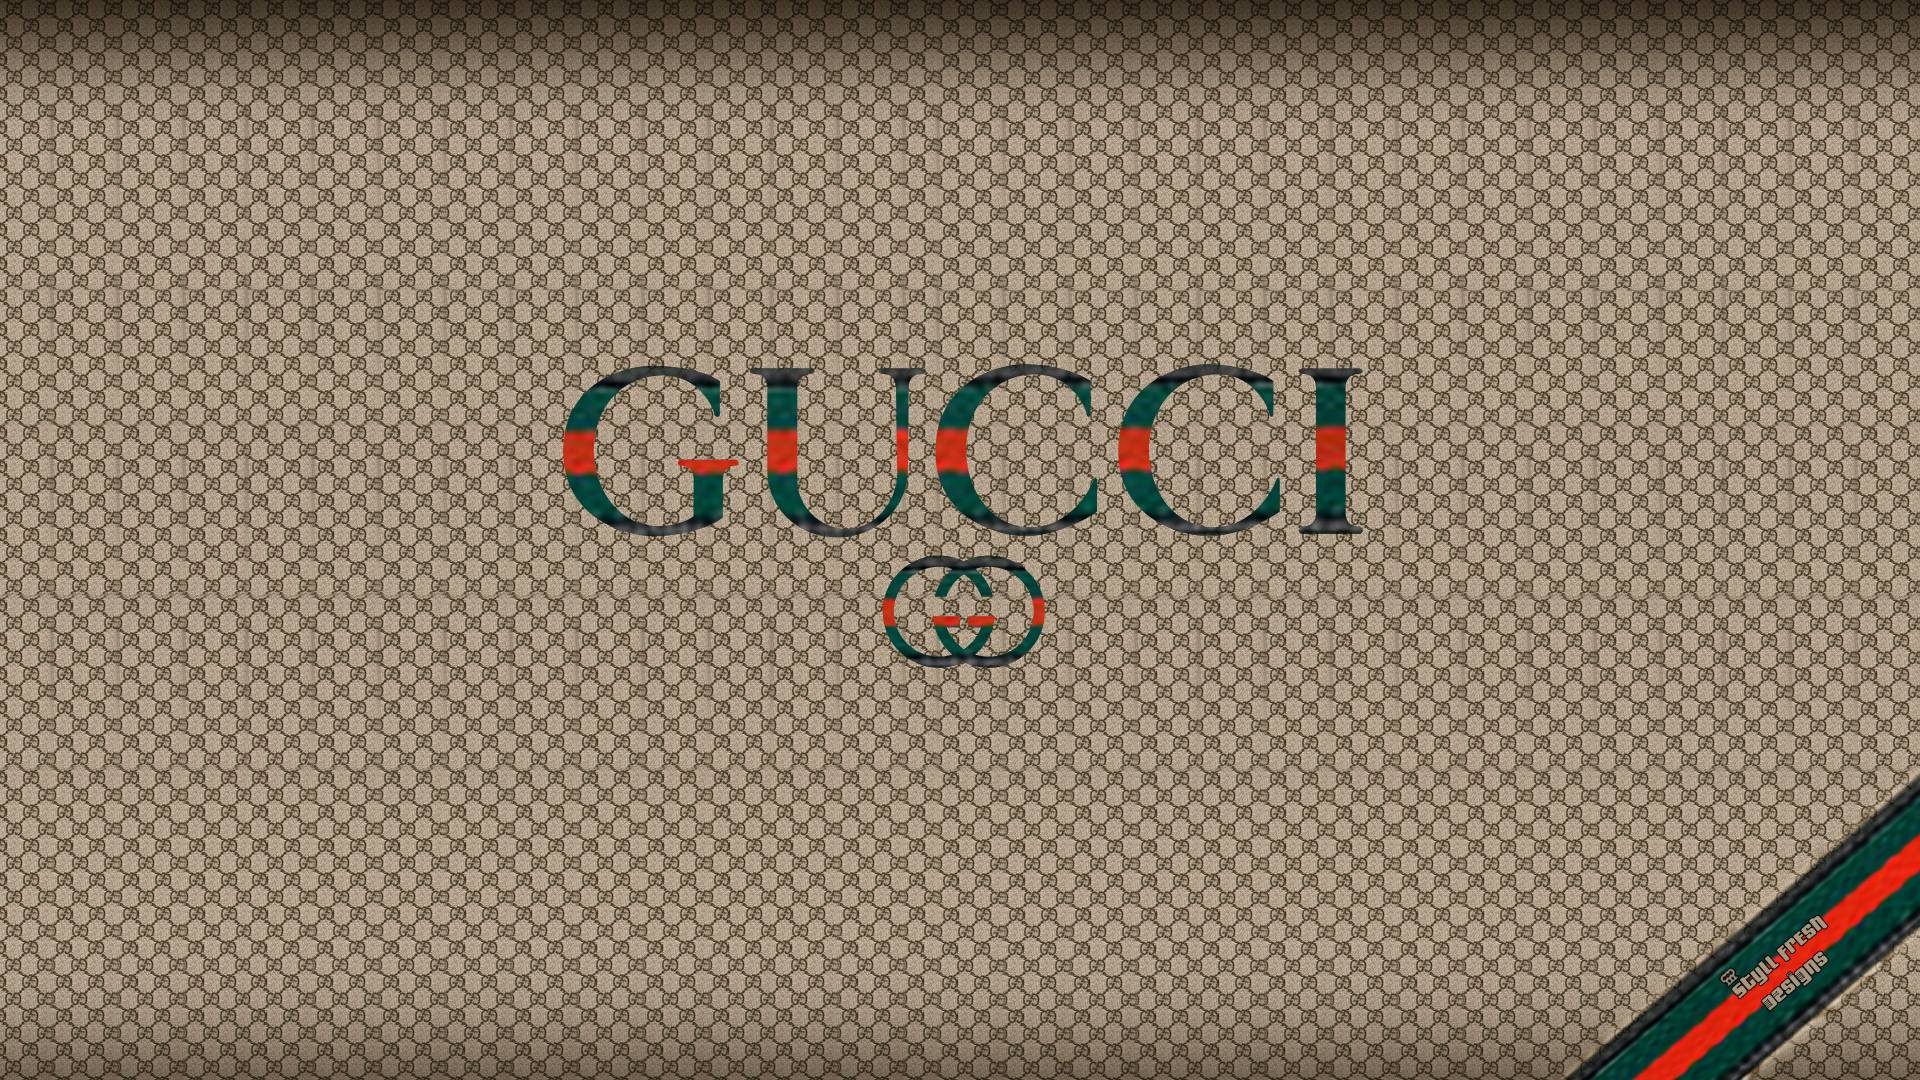 Gucci Wallpapers HD - PixelsTalk.Net